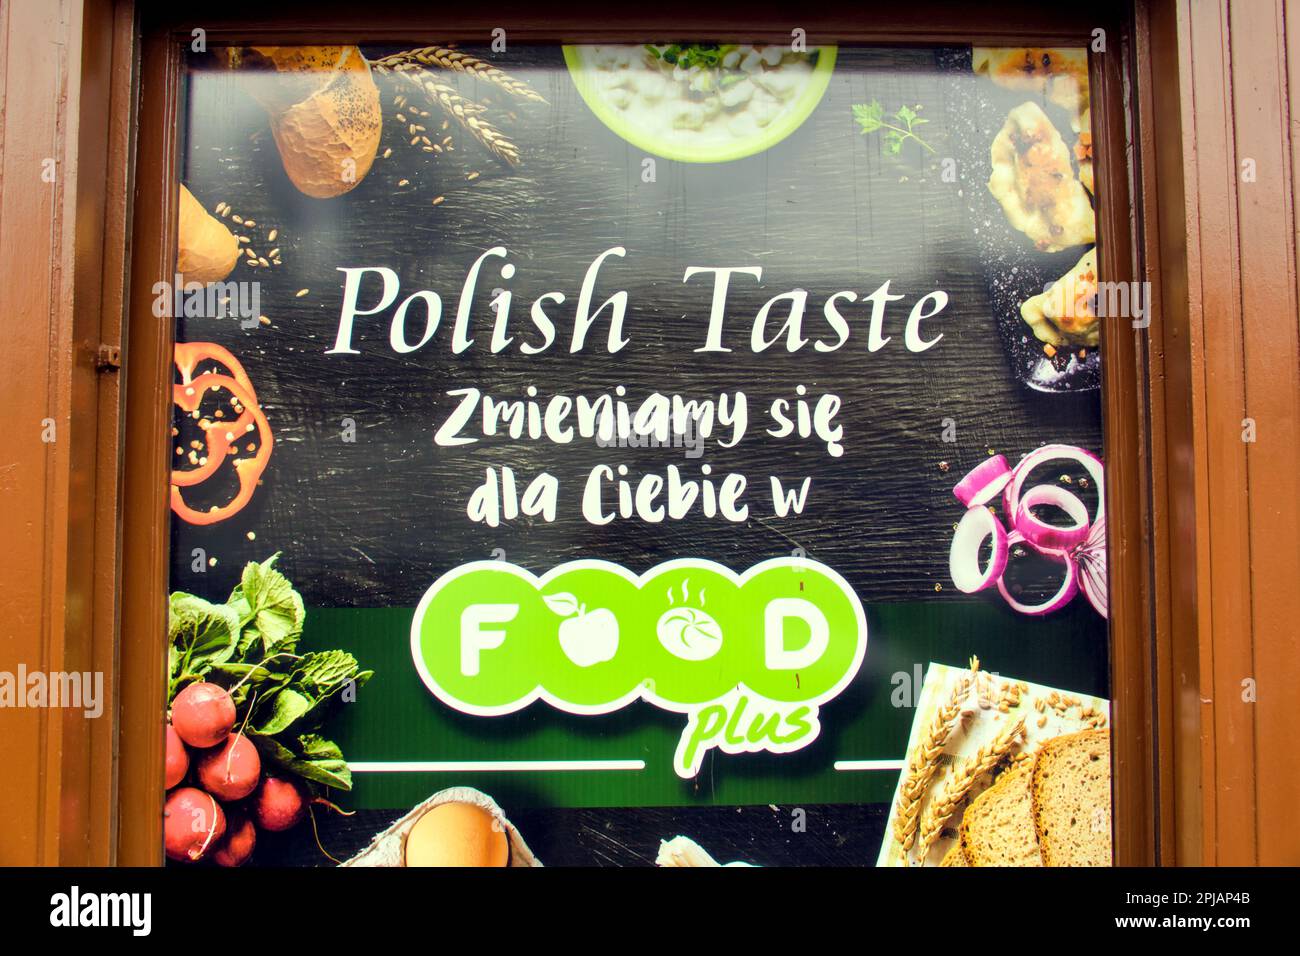 polish Taste Mini Market Food Store Polish Taste 21 Hyndland St Glasgow, Schottland, Großbritannien Stockfoto